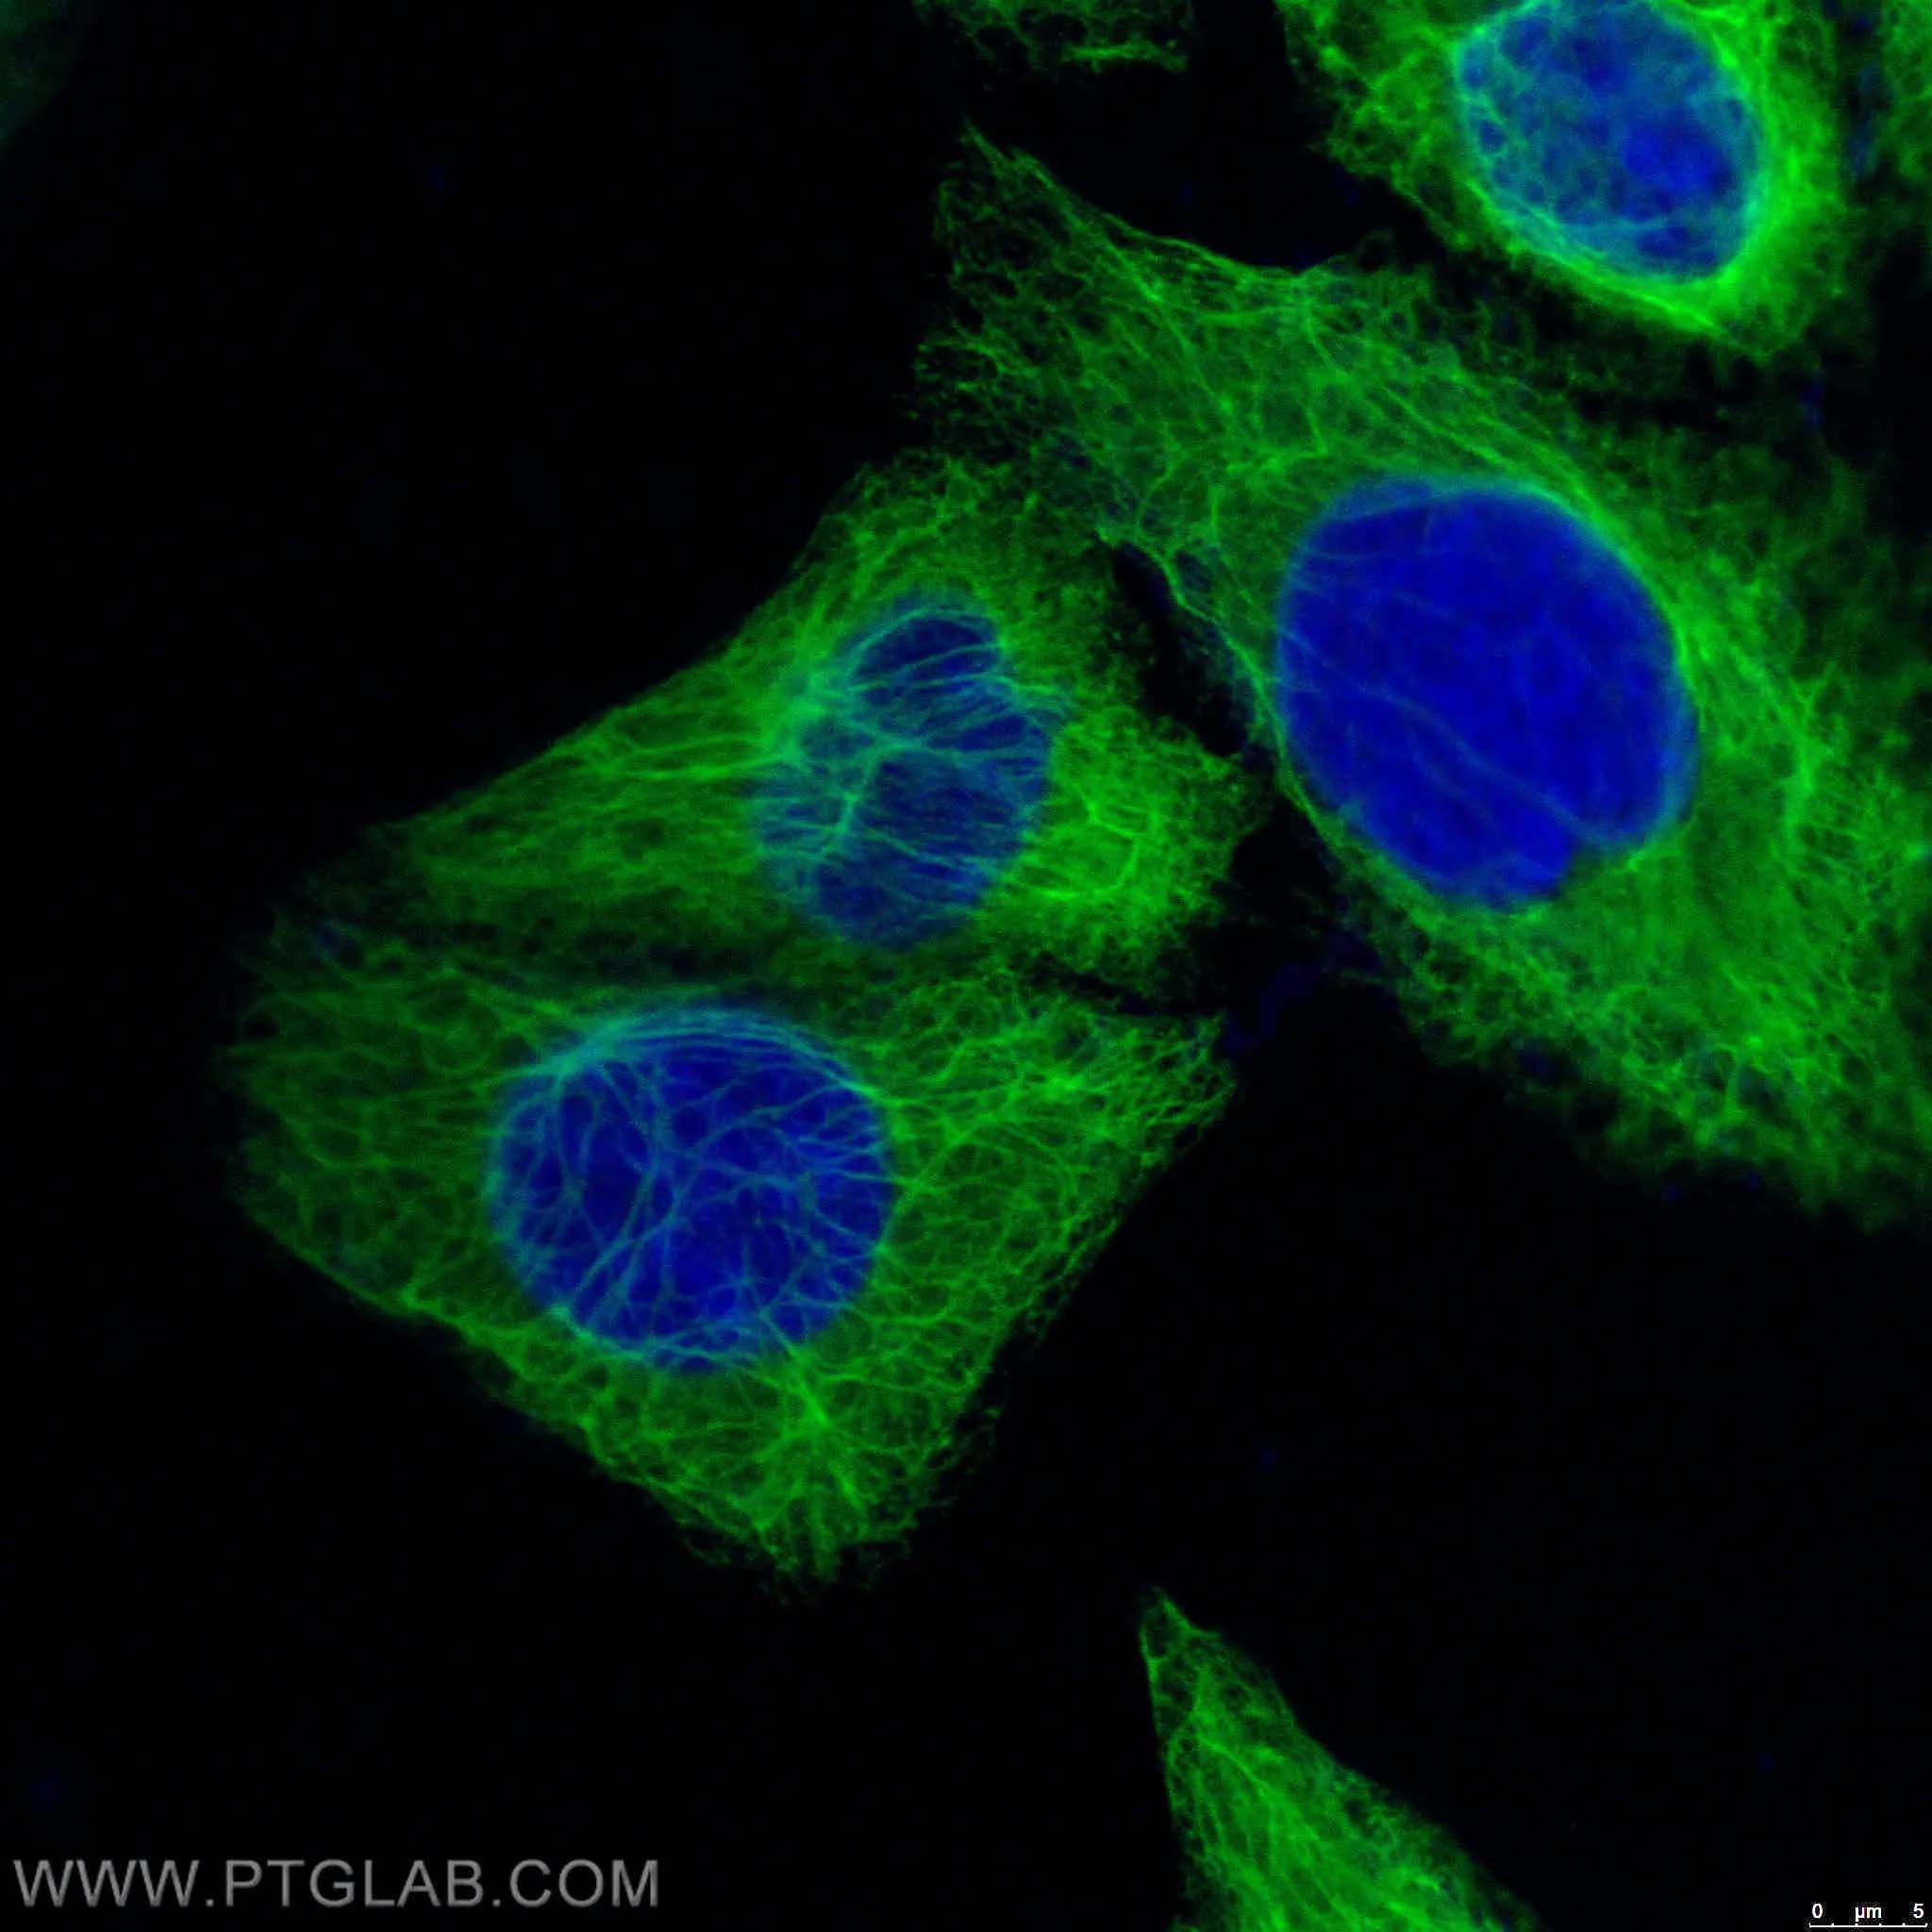 Proteintech anti-cytokeratin-18 IF image